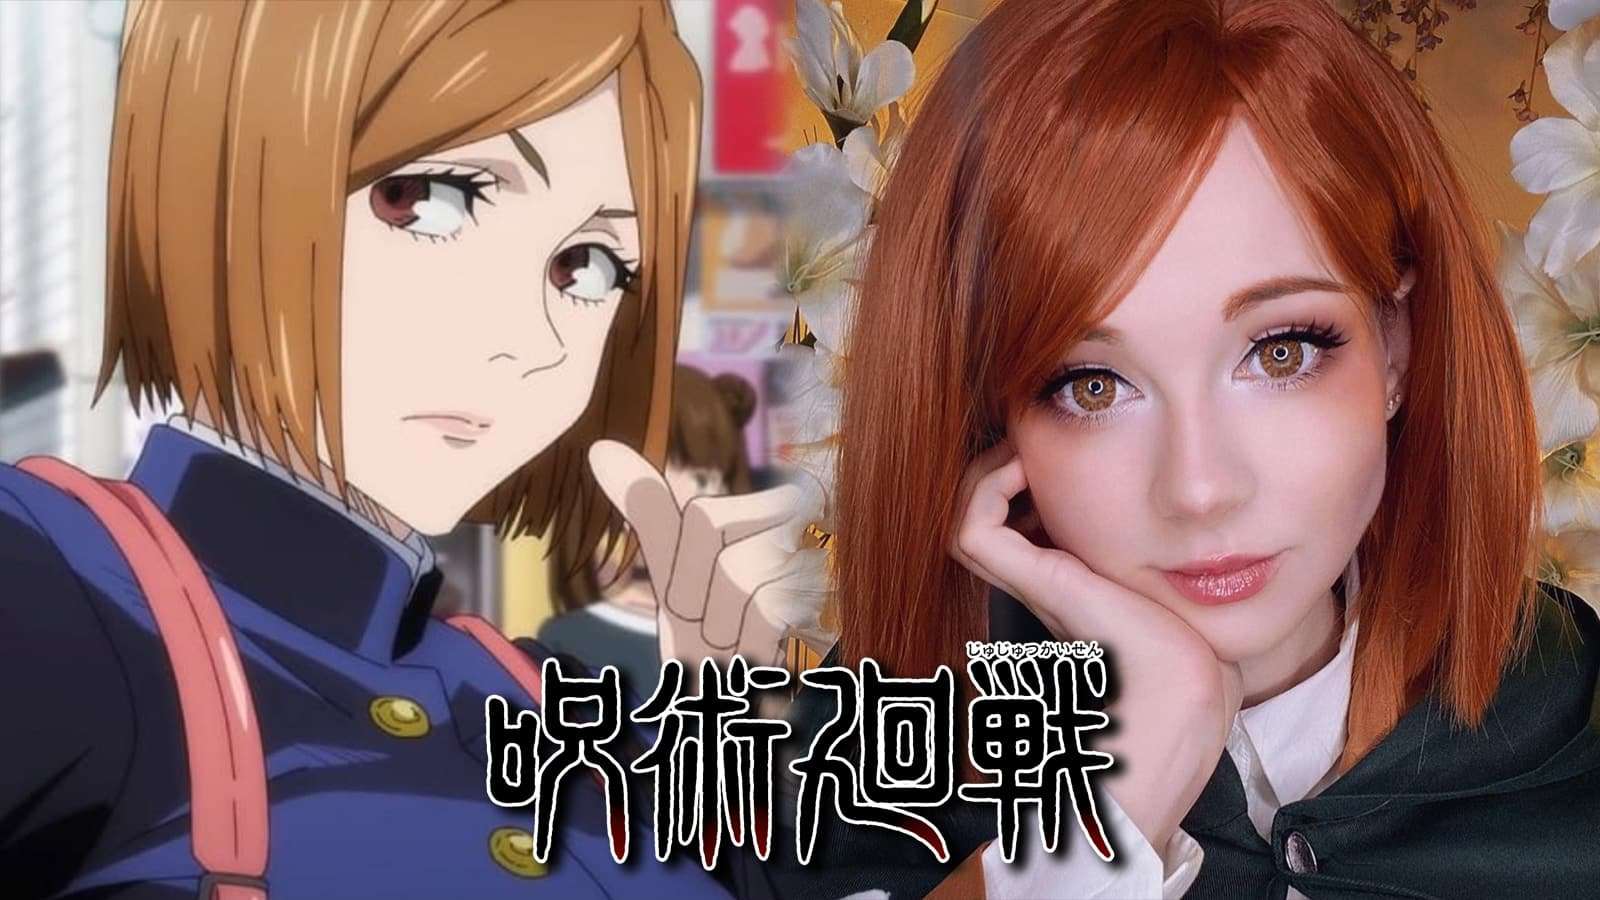 Nobara Kugisaki in Jujutsu Kaisen anime next to cosplayer